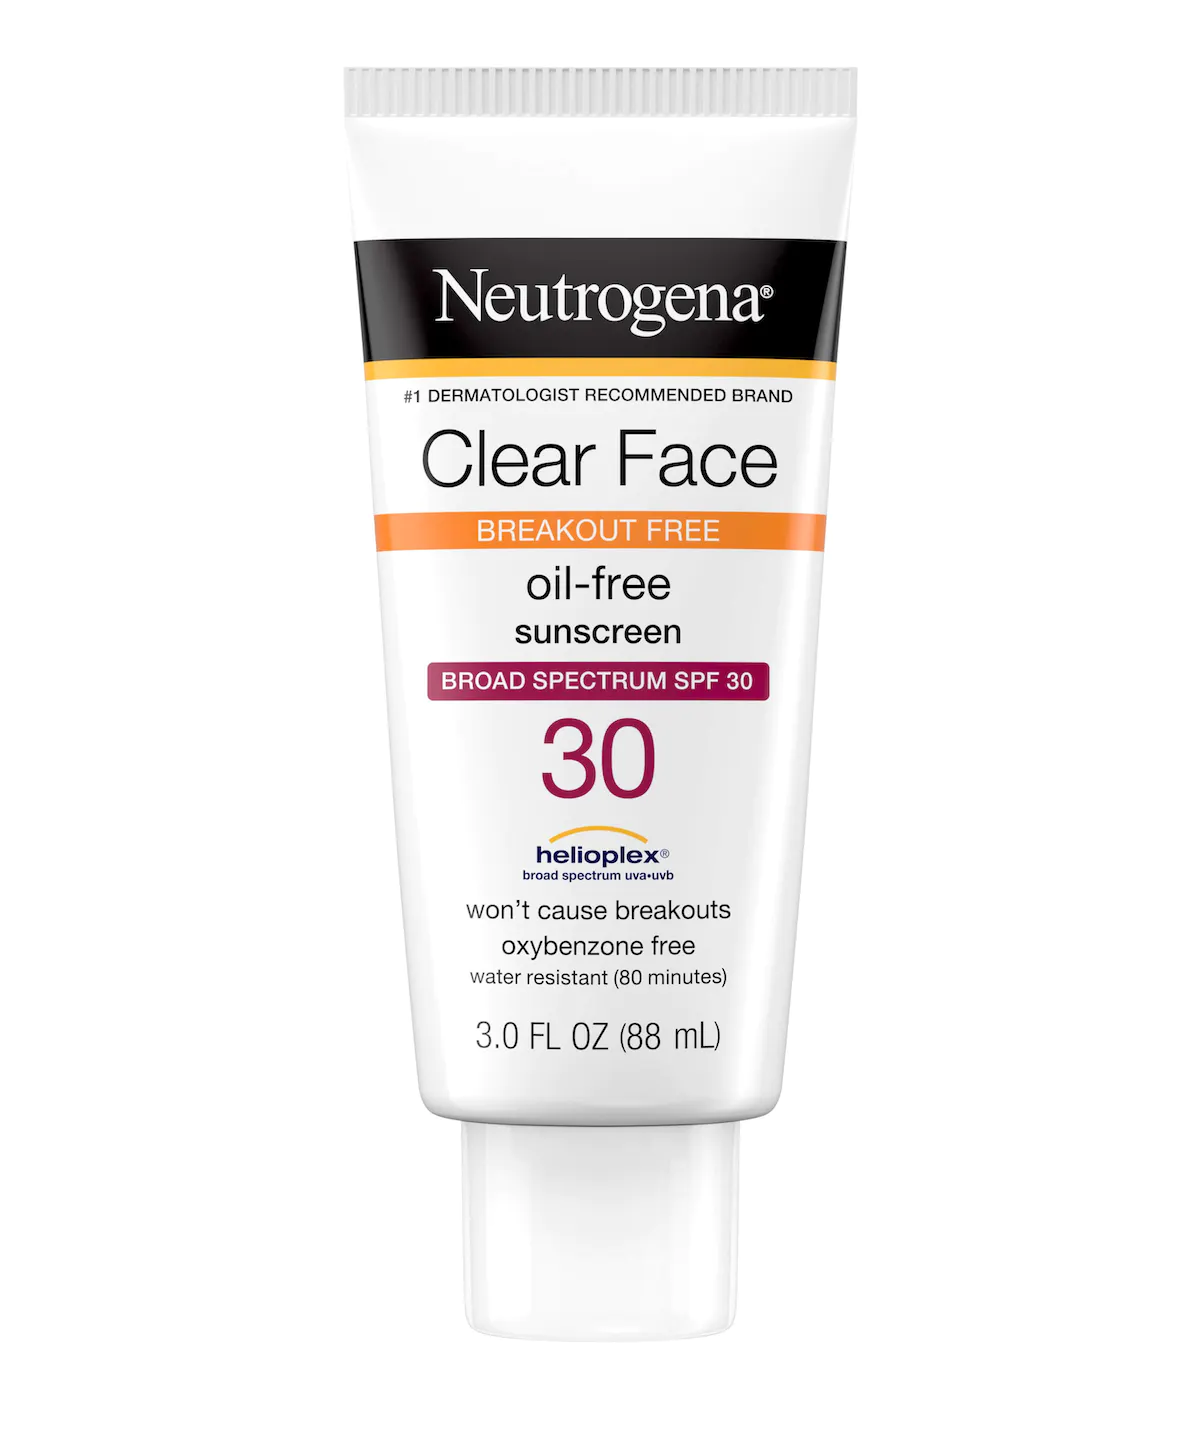 Neutrogena Clear Face Oil-Free Sunscreen